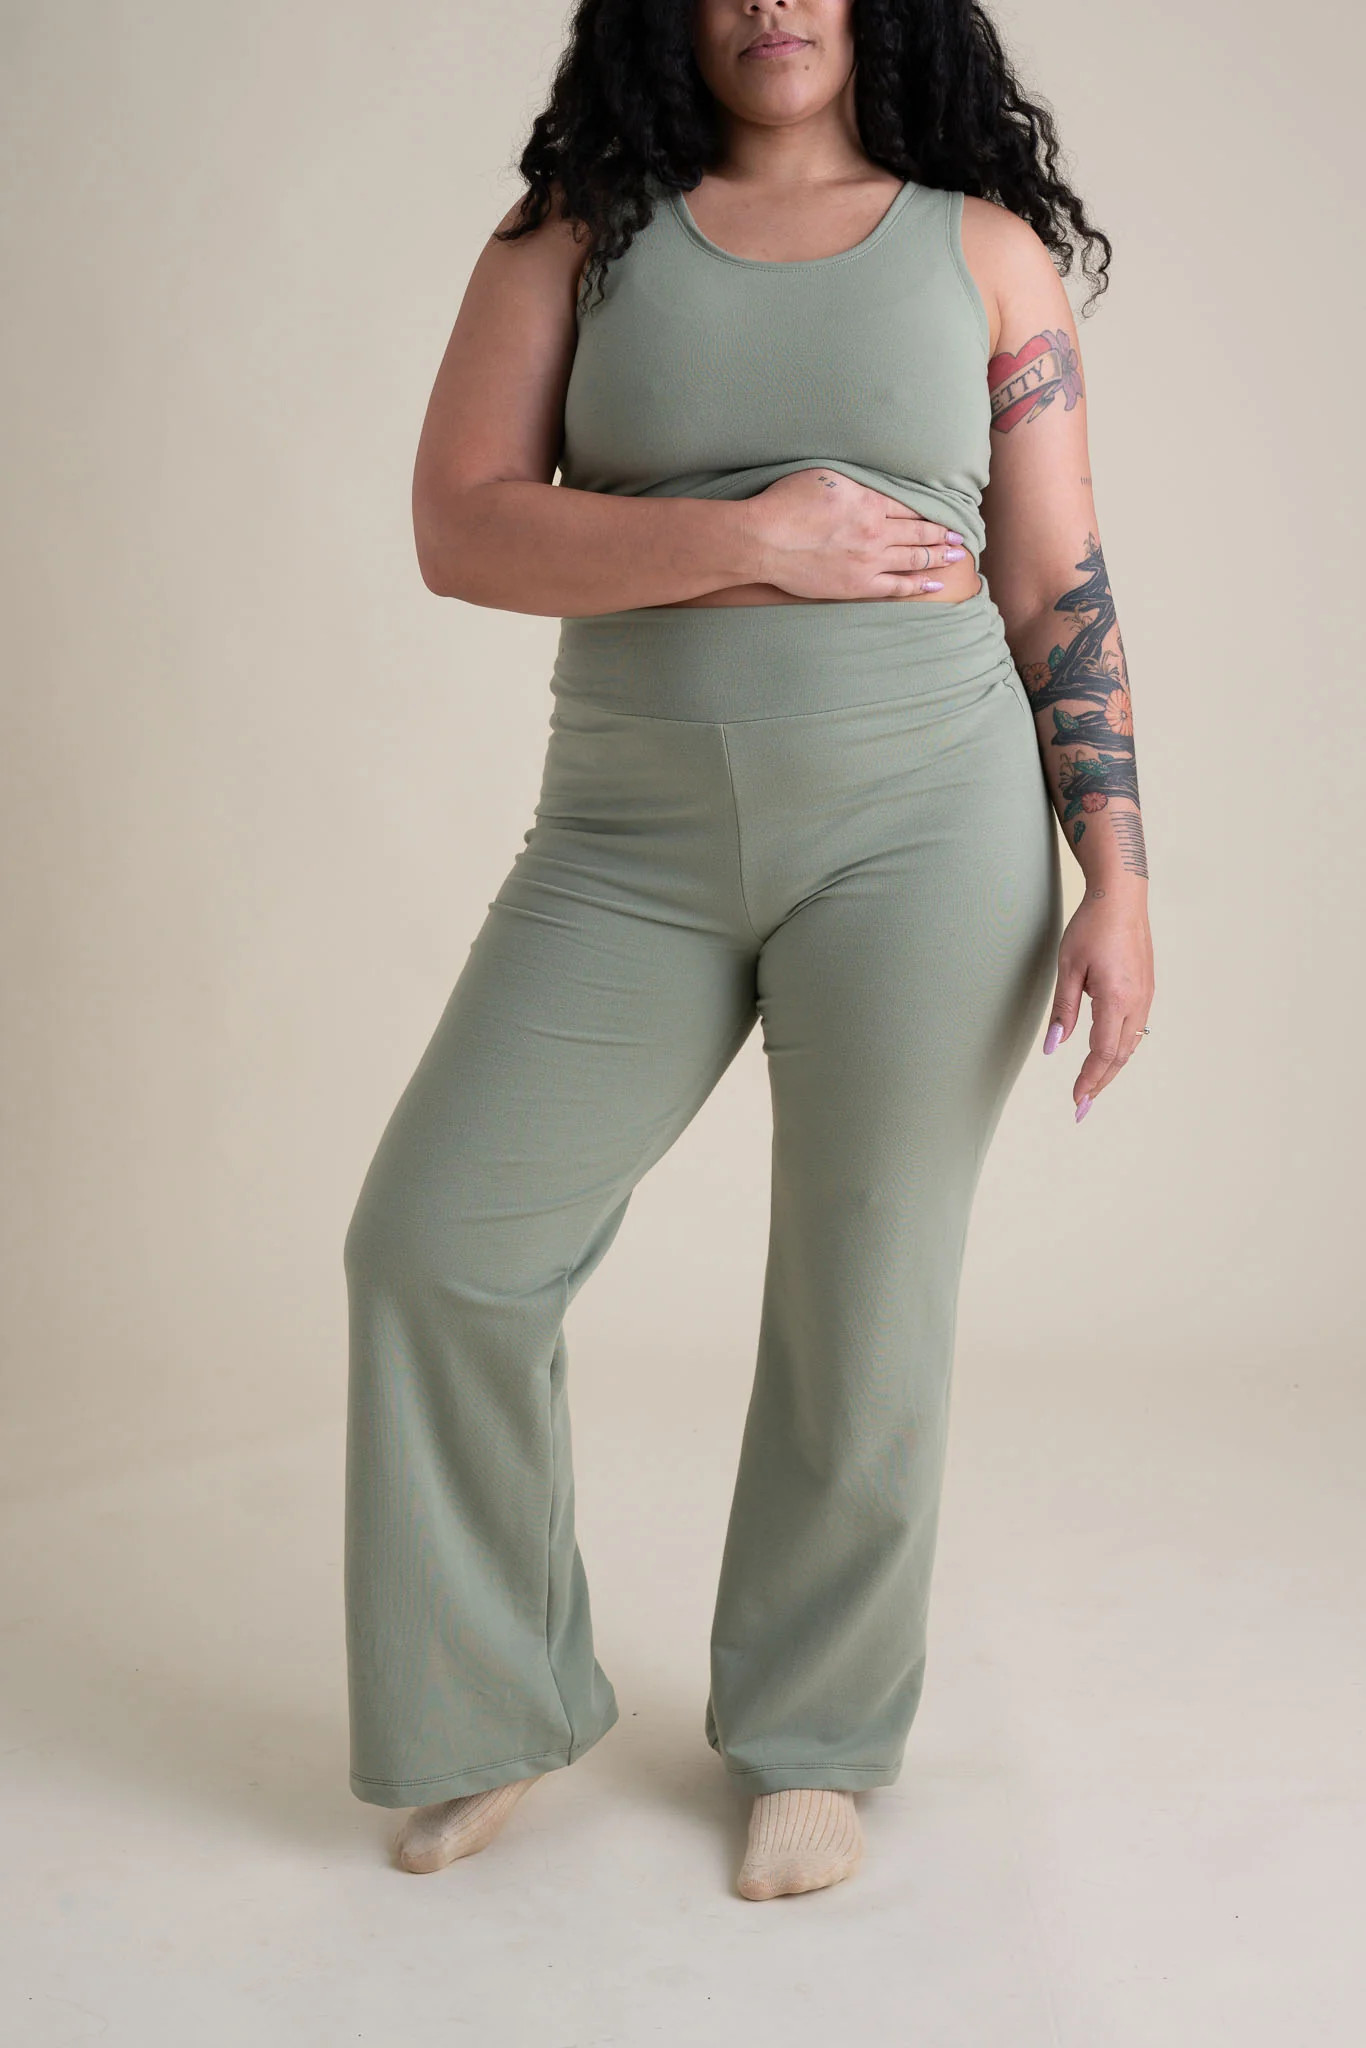 Eleanor Pants in Pistachio | Conscious Clothing